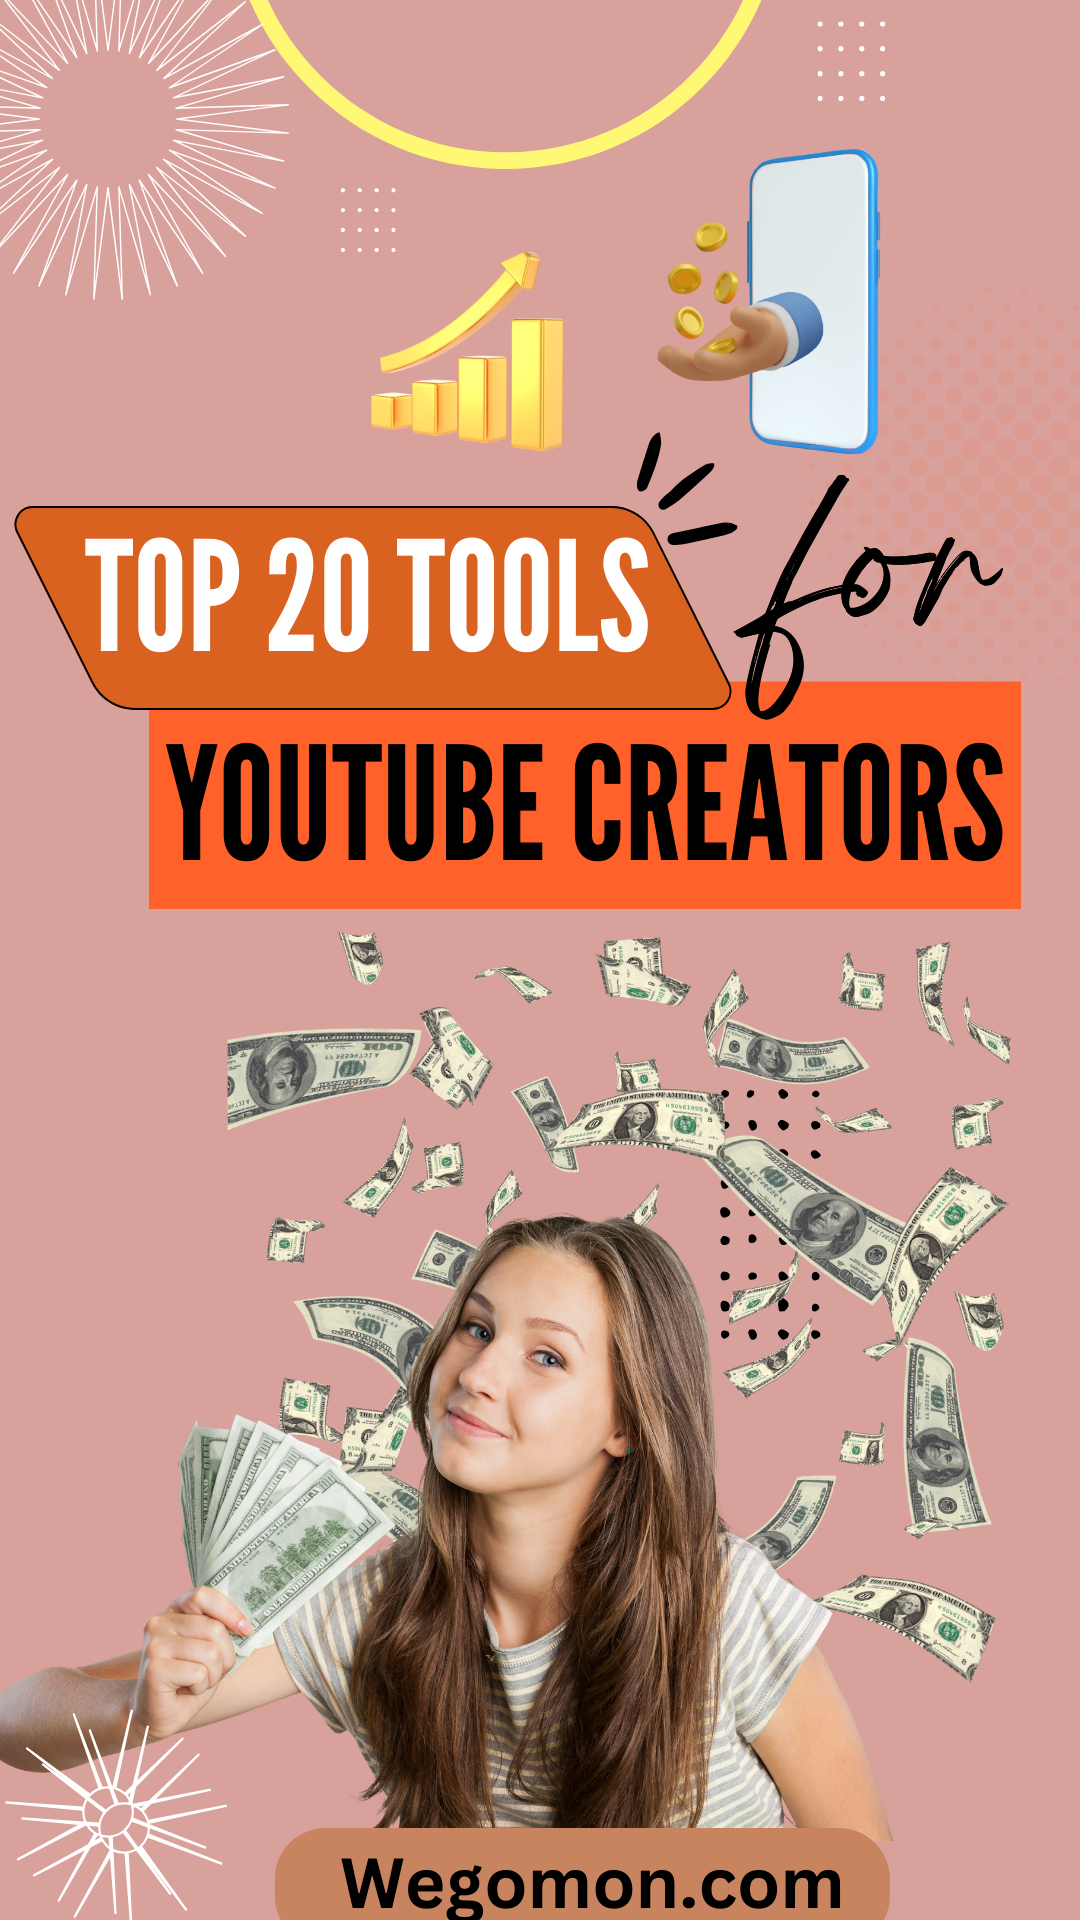 Top 20 tools for Youtube creators